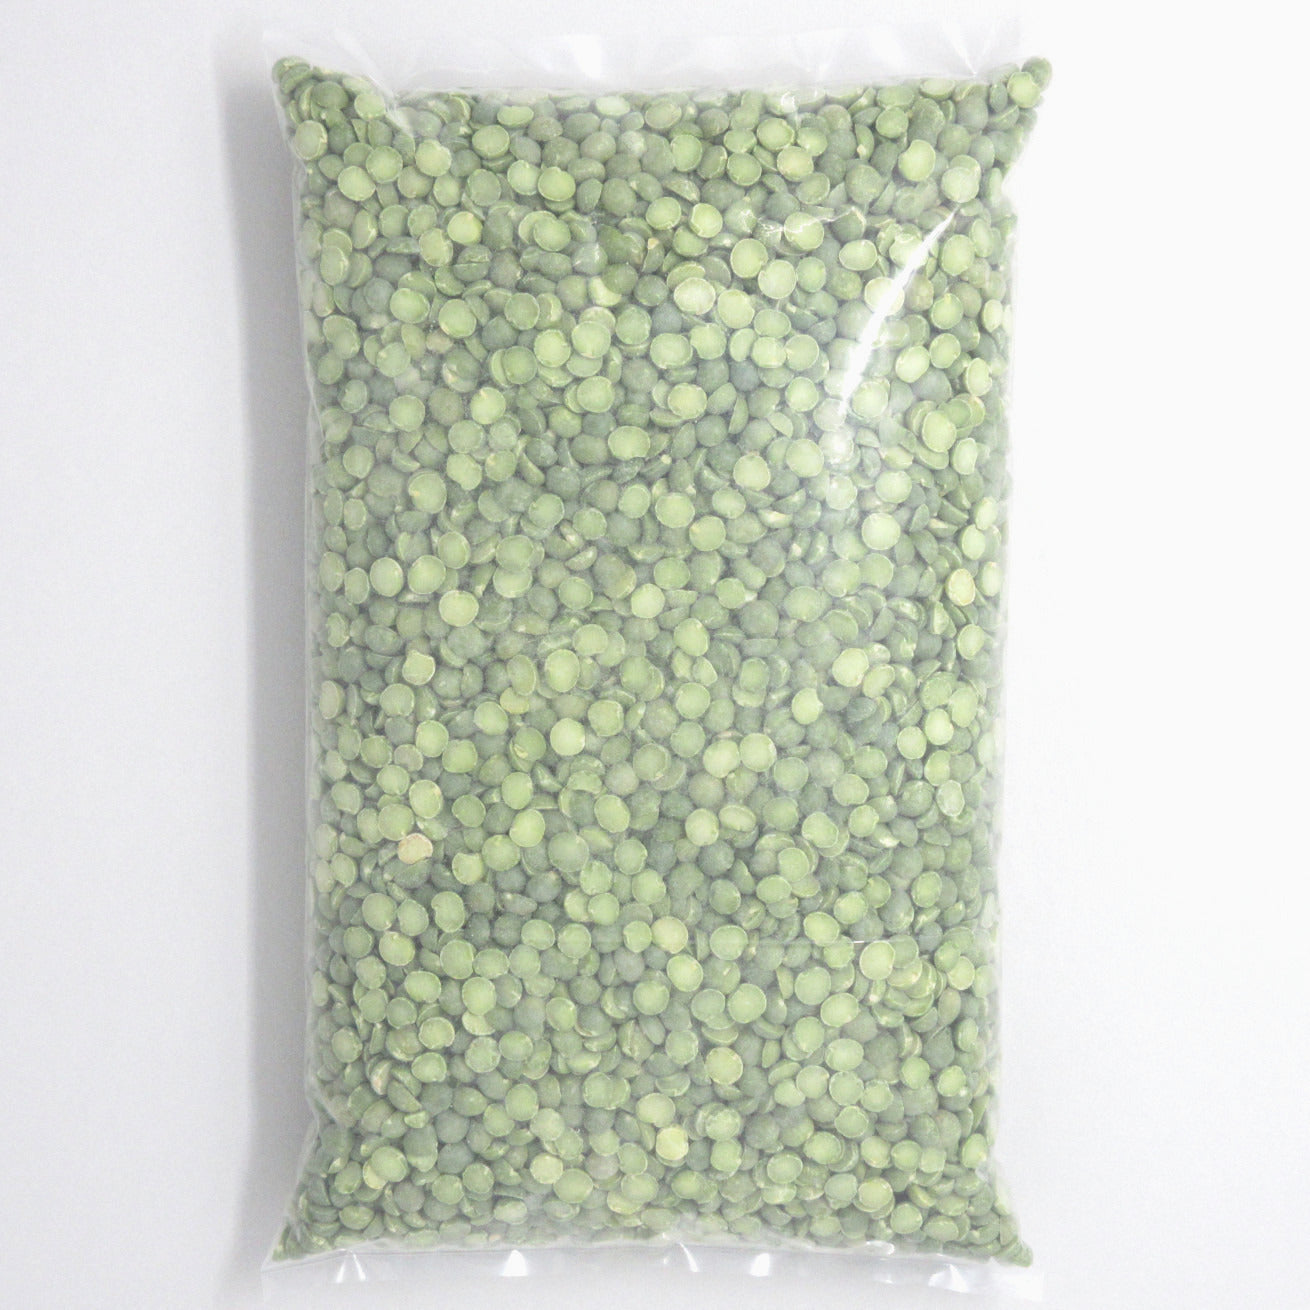 Flour Barrel product image - Split Green Peas